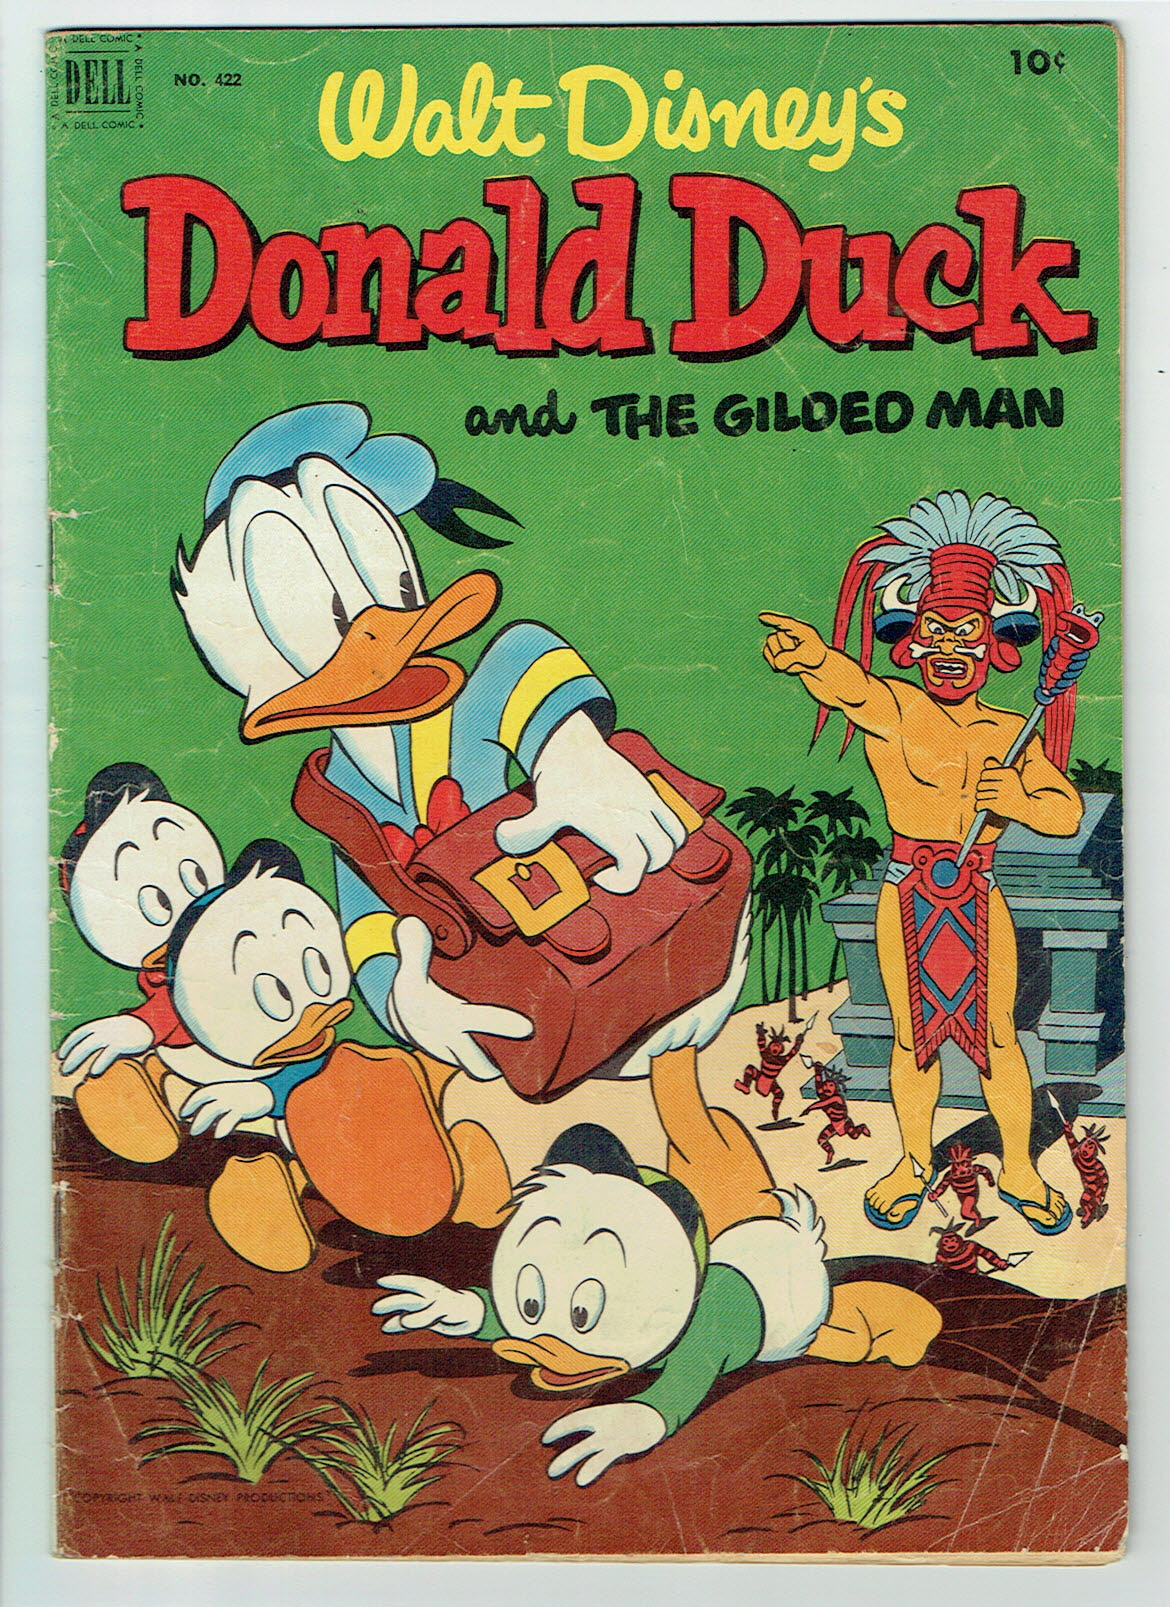 Donald Duck #422